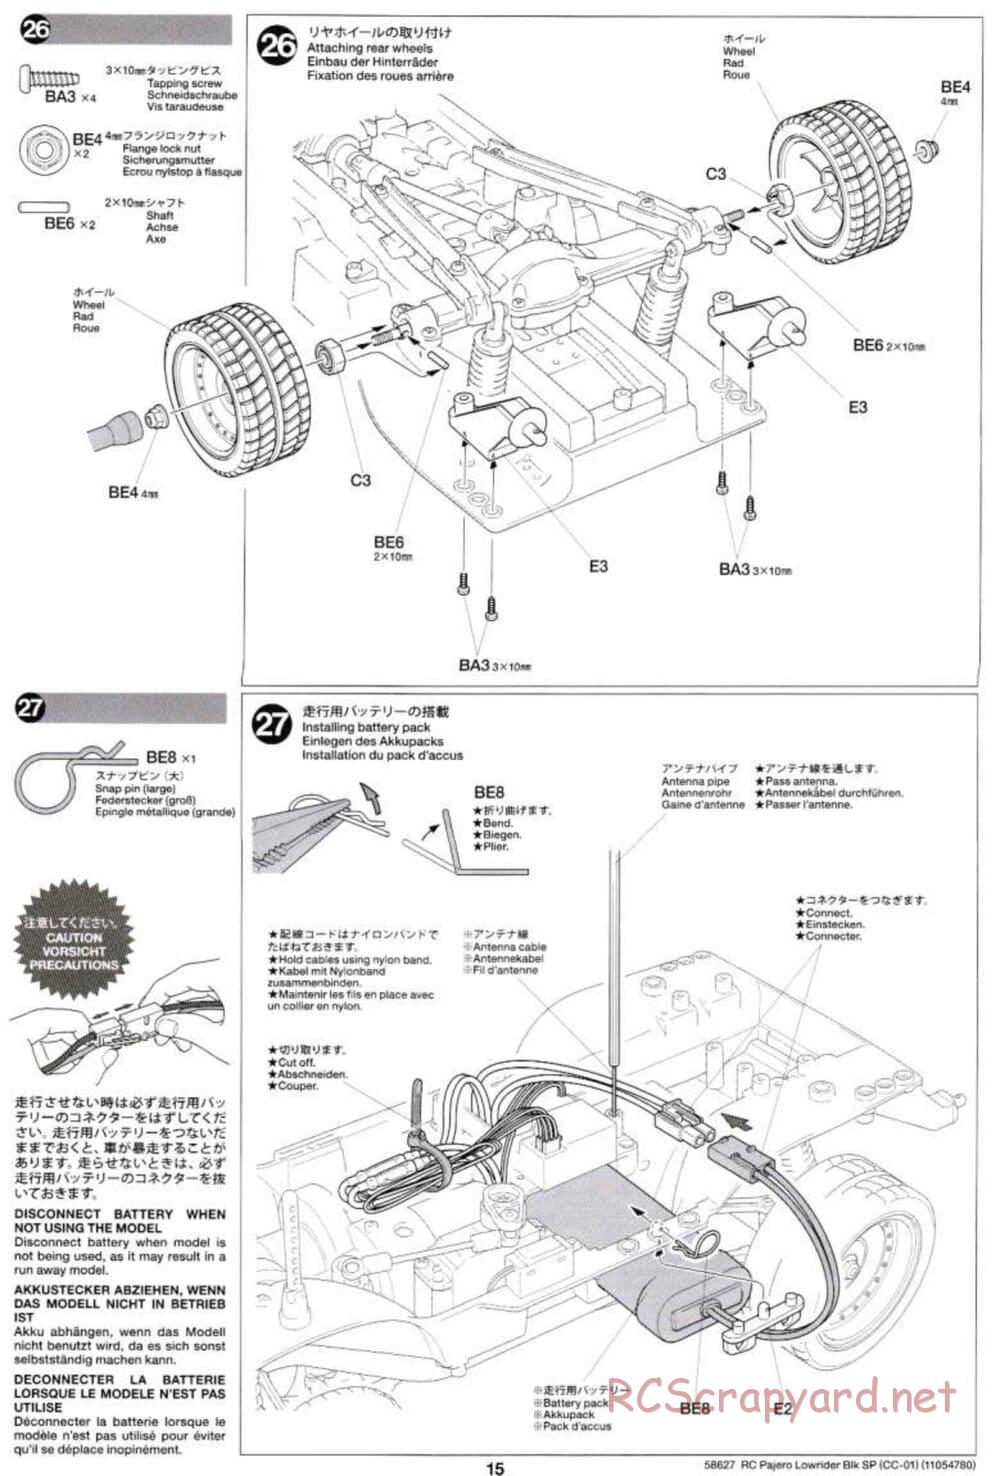 Tamiya - Mitsubishi Pajero Custom Lowrider Black Special - CC-01 Chassis - Manual - Page 15